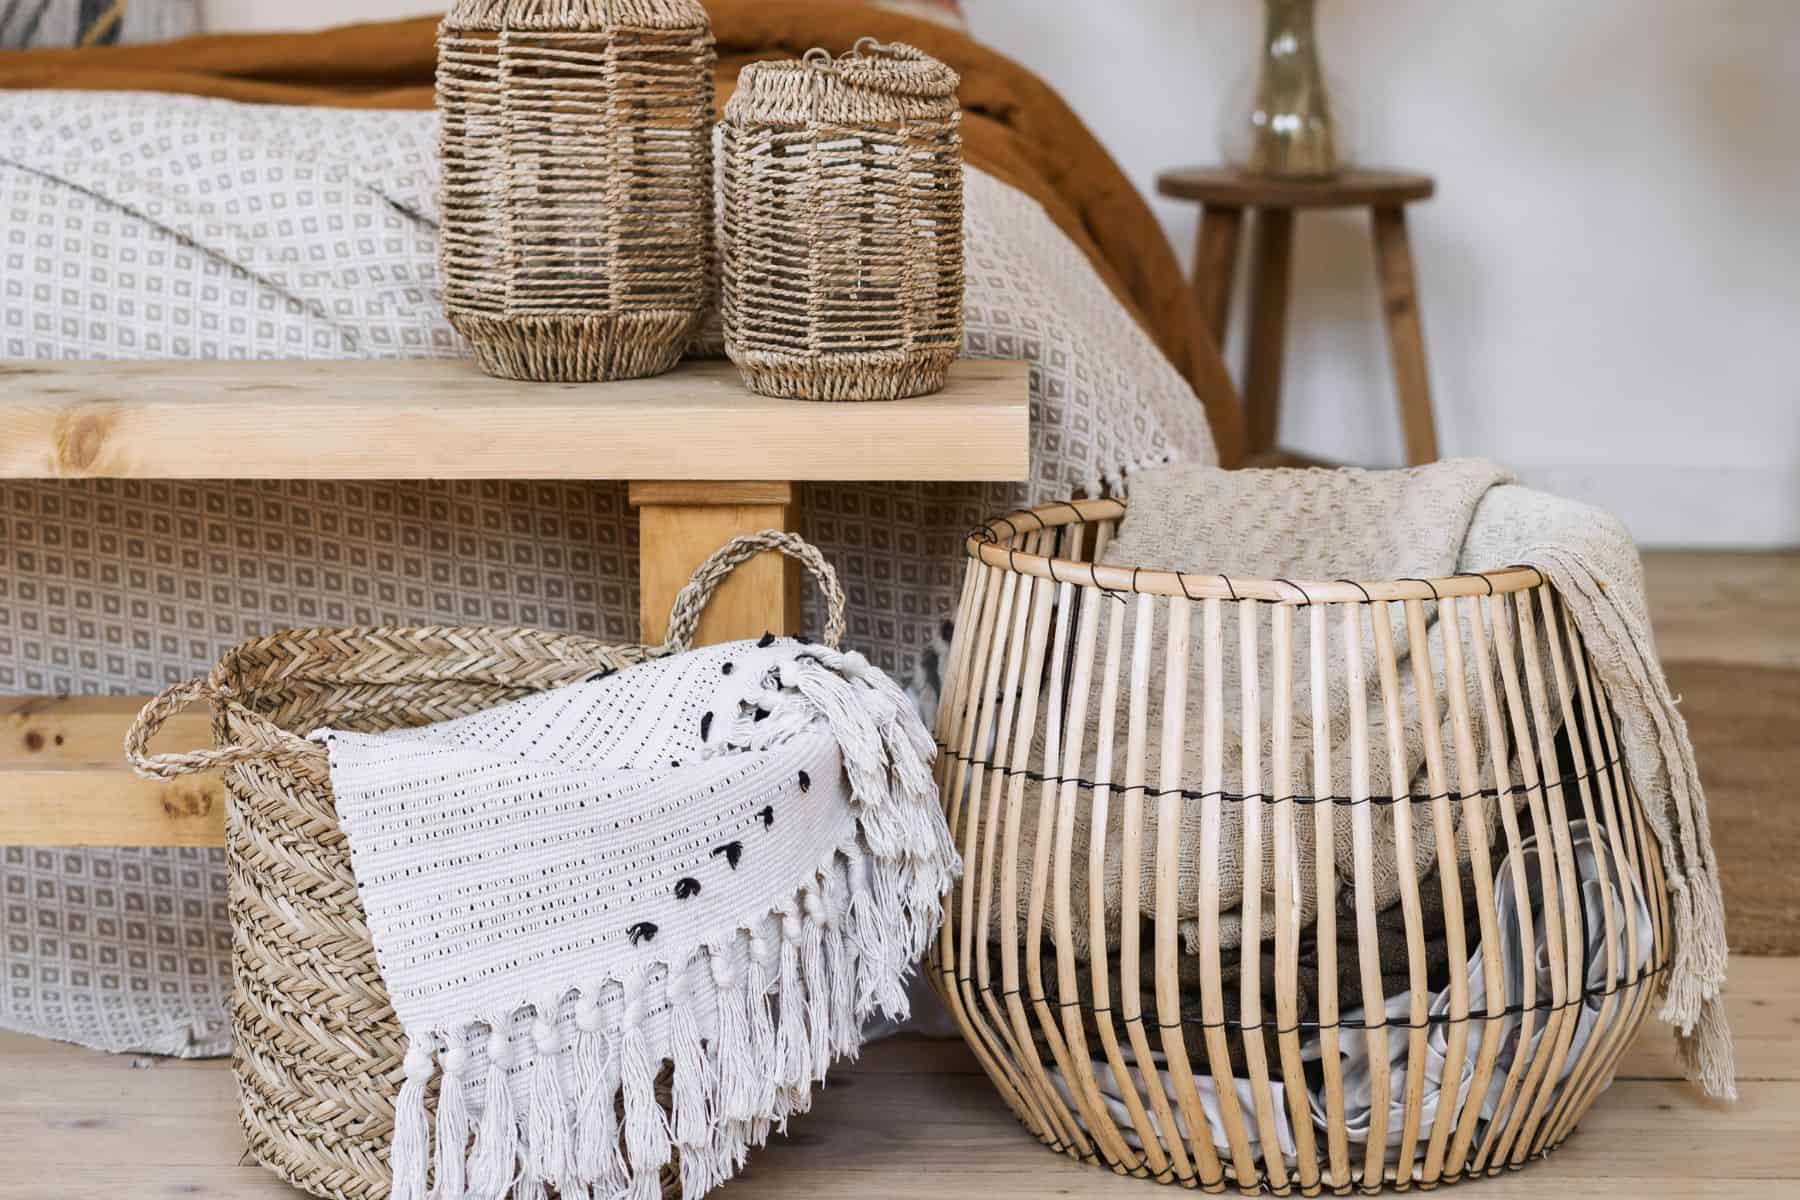 Boho style natural fibers and rattan furniture.